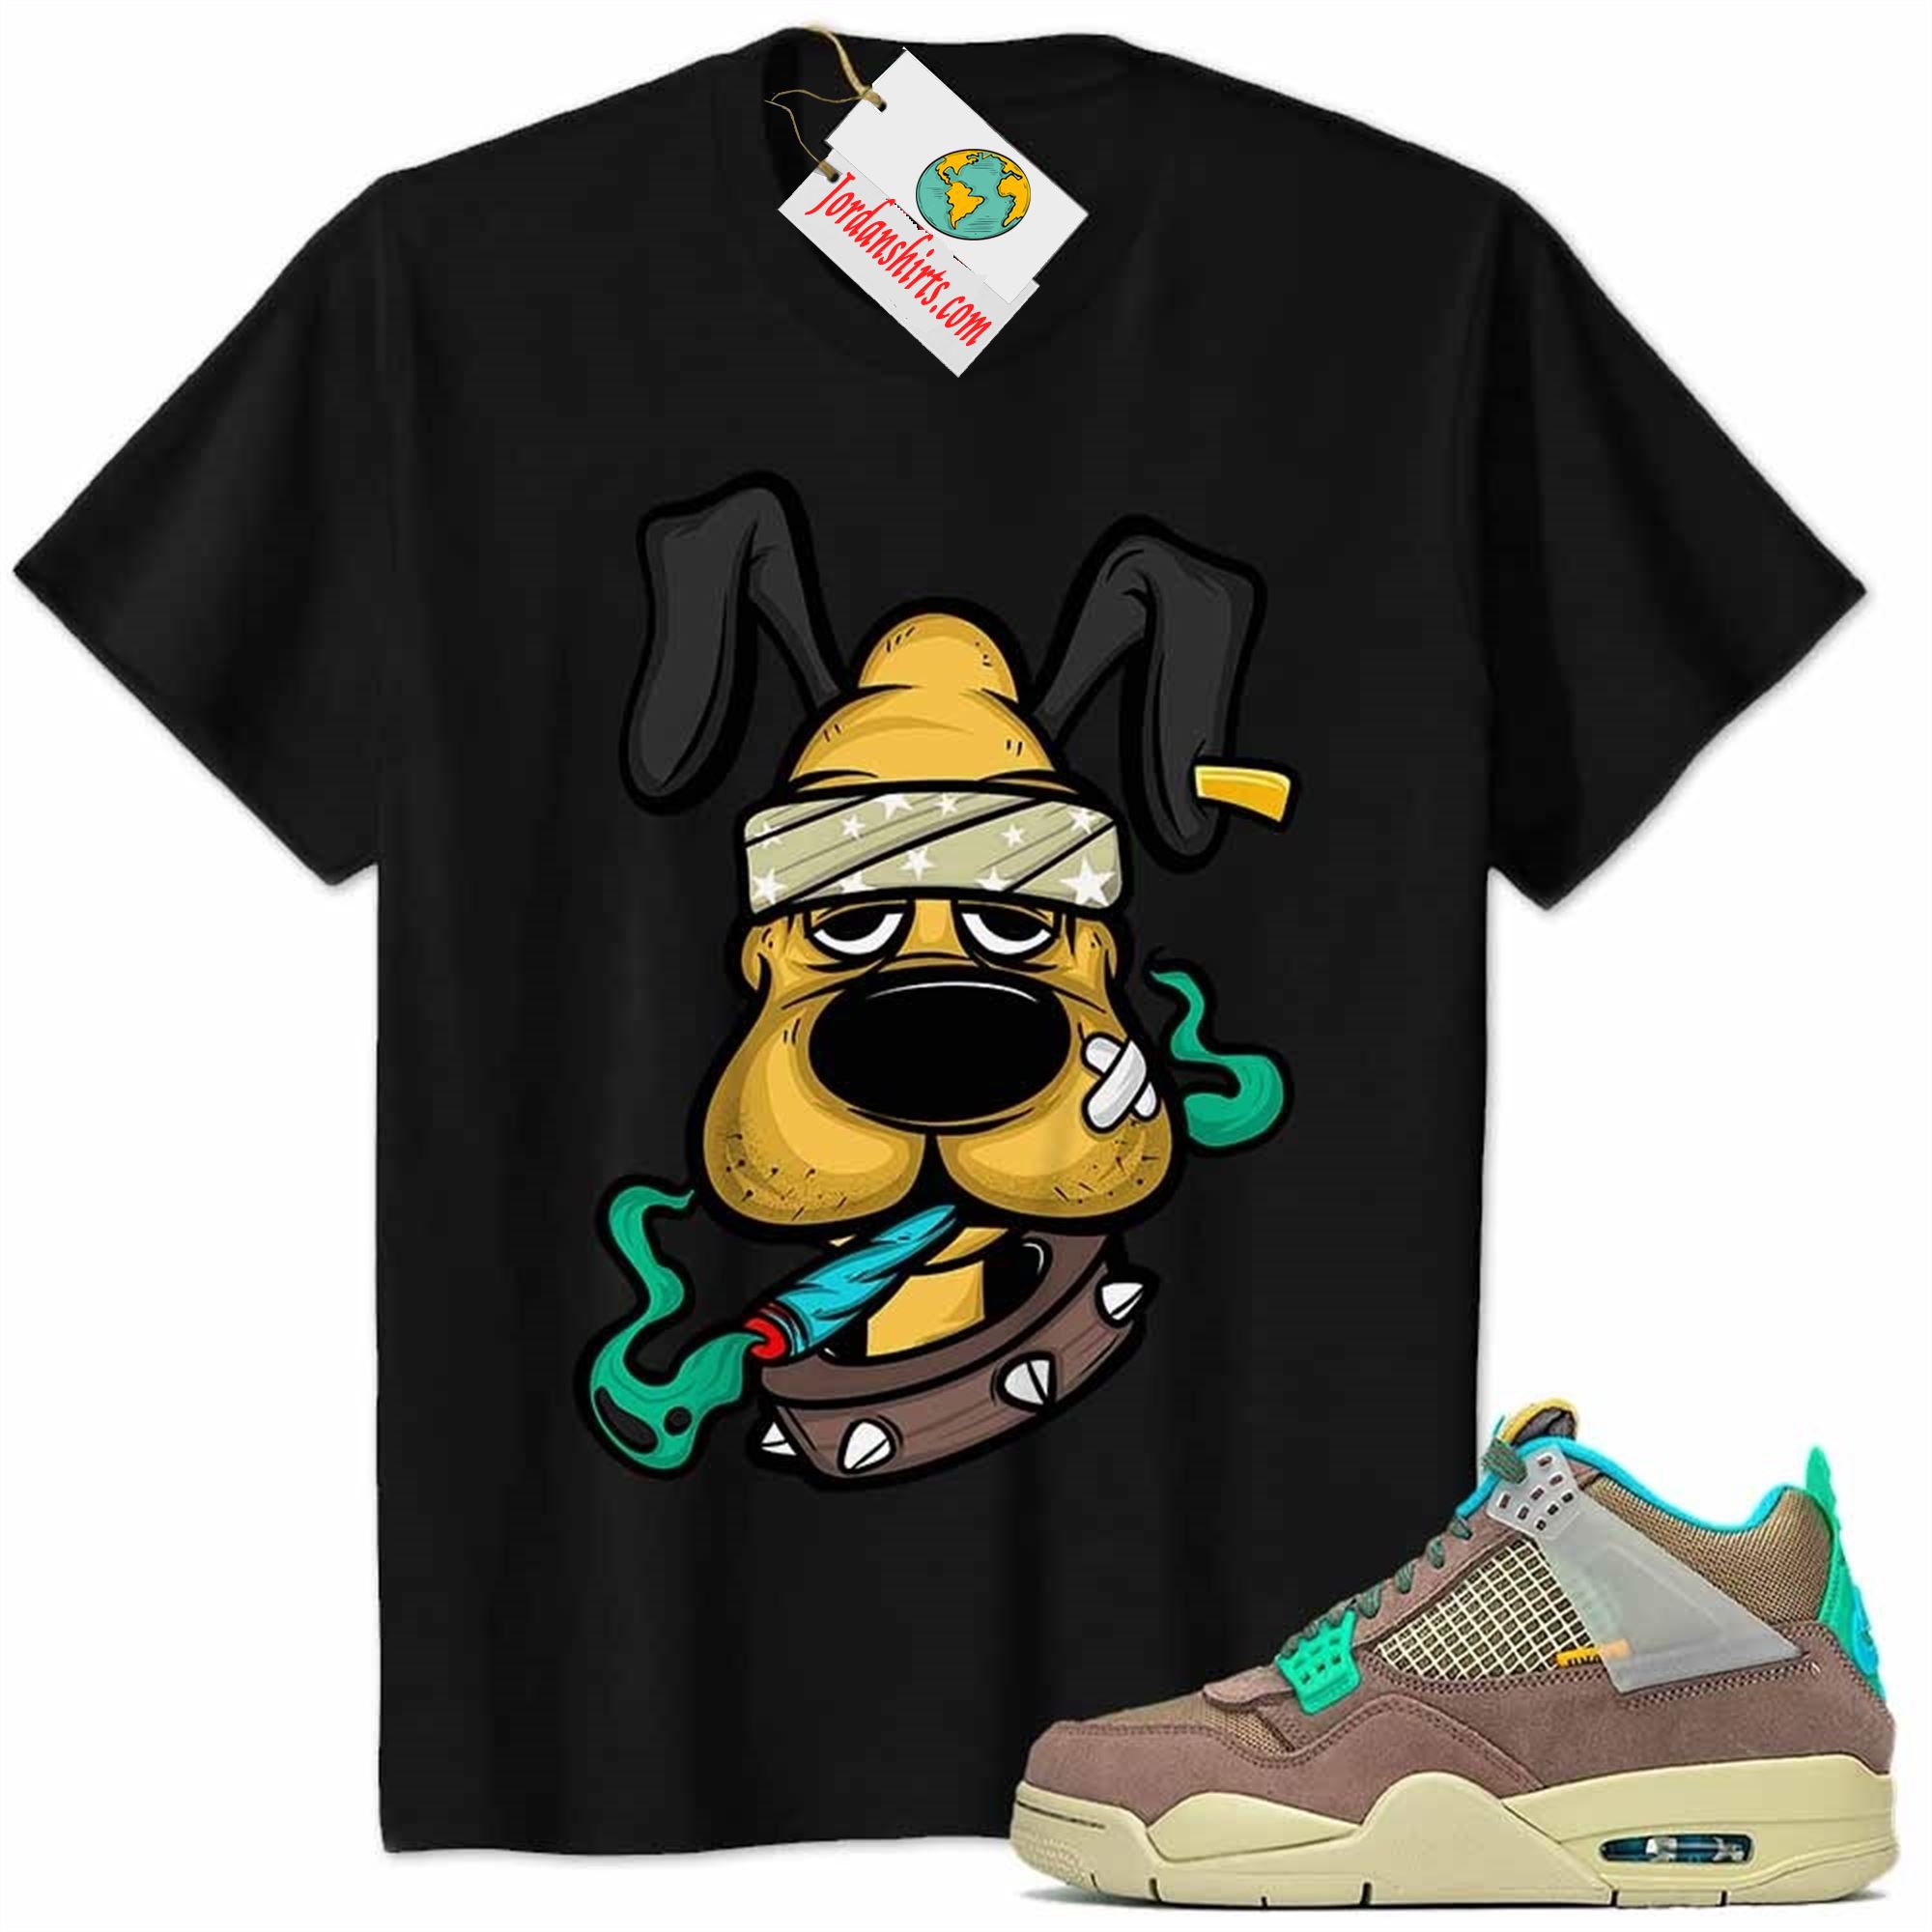 Jordan 4 Shirt, Gangster Pluto Smoke Weed Black Air Jordan 4 Union Taupe Haze 4s Plus Size Up To 5xl